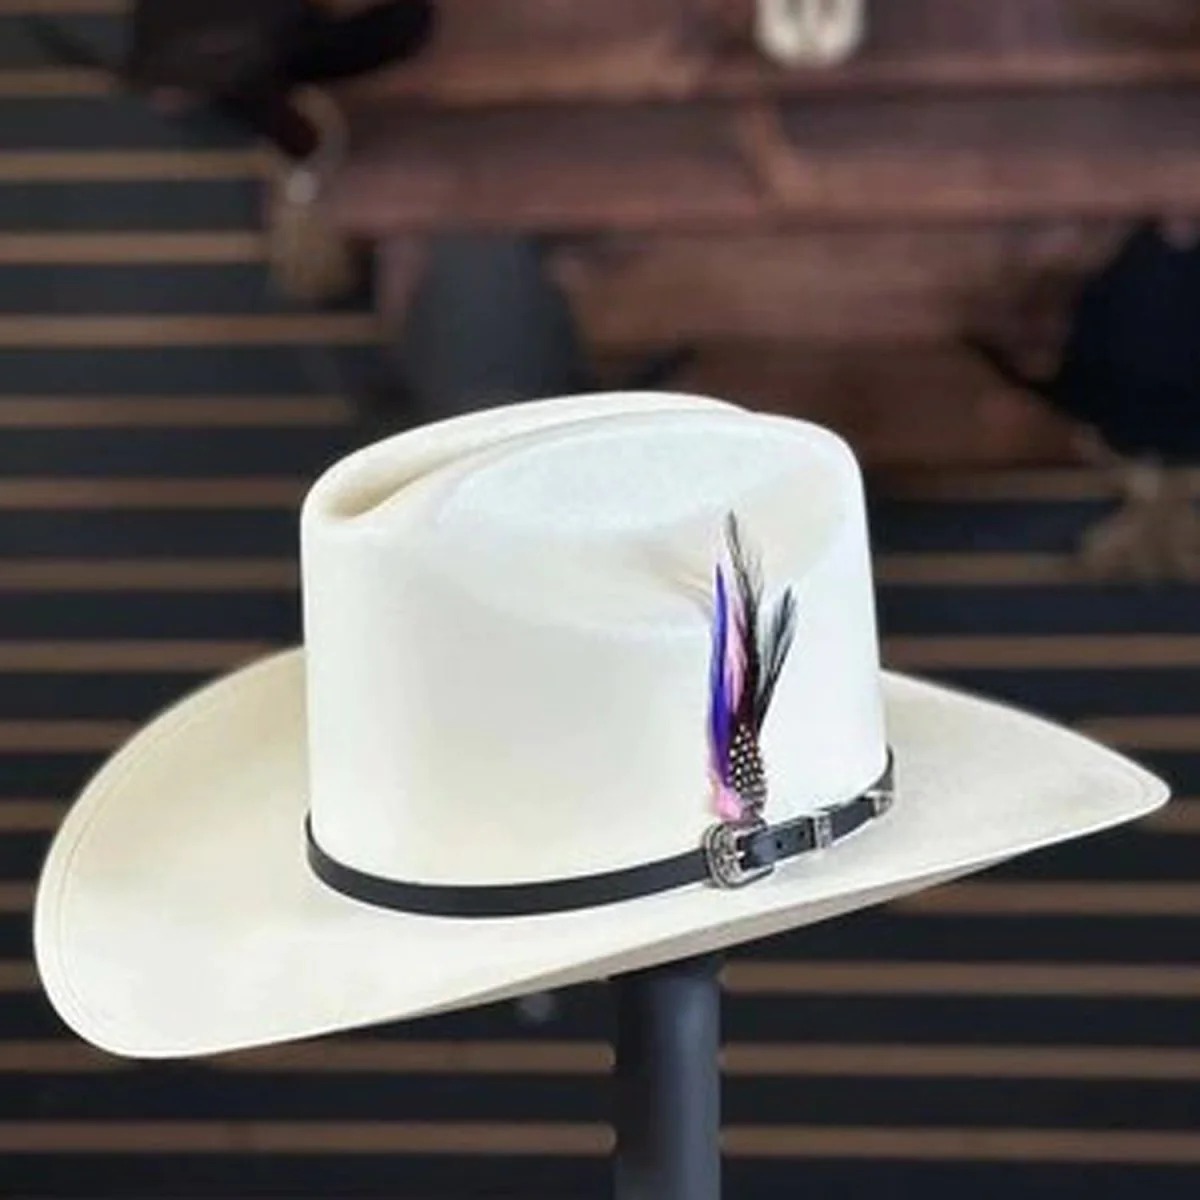 Sombrero El Panter 5,000X Estilo Sinaloa $199.99 con ENVIO GRATIS. Para comprar llama al 323-312-3317 o haz click aqui en este link: caballobronco.com/collections/cu… #caballobronco #texanas #sombreros #panterbelico #sombrerosvaqueros #cowboyhat #sombreroschuernoschuecos #cuernoschuecos